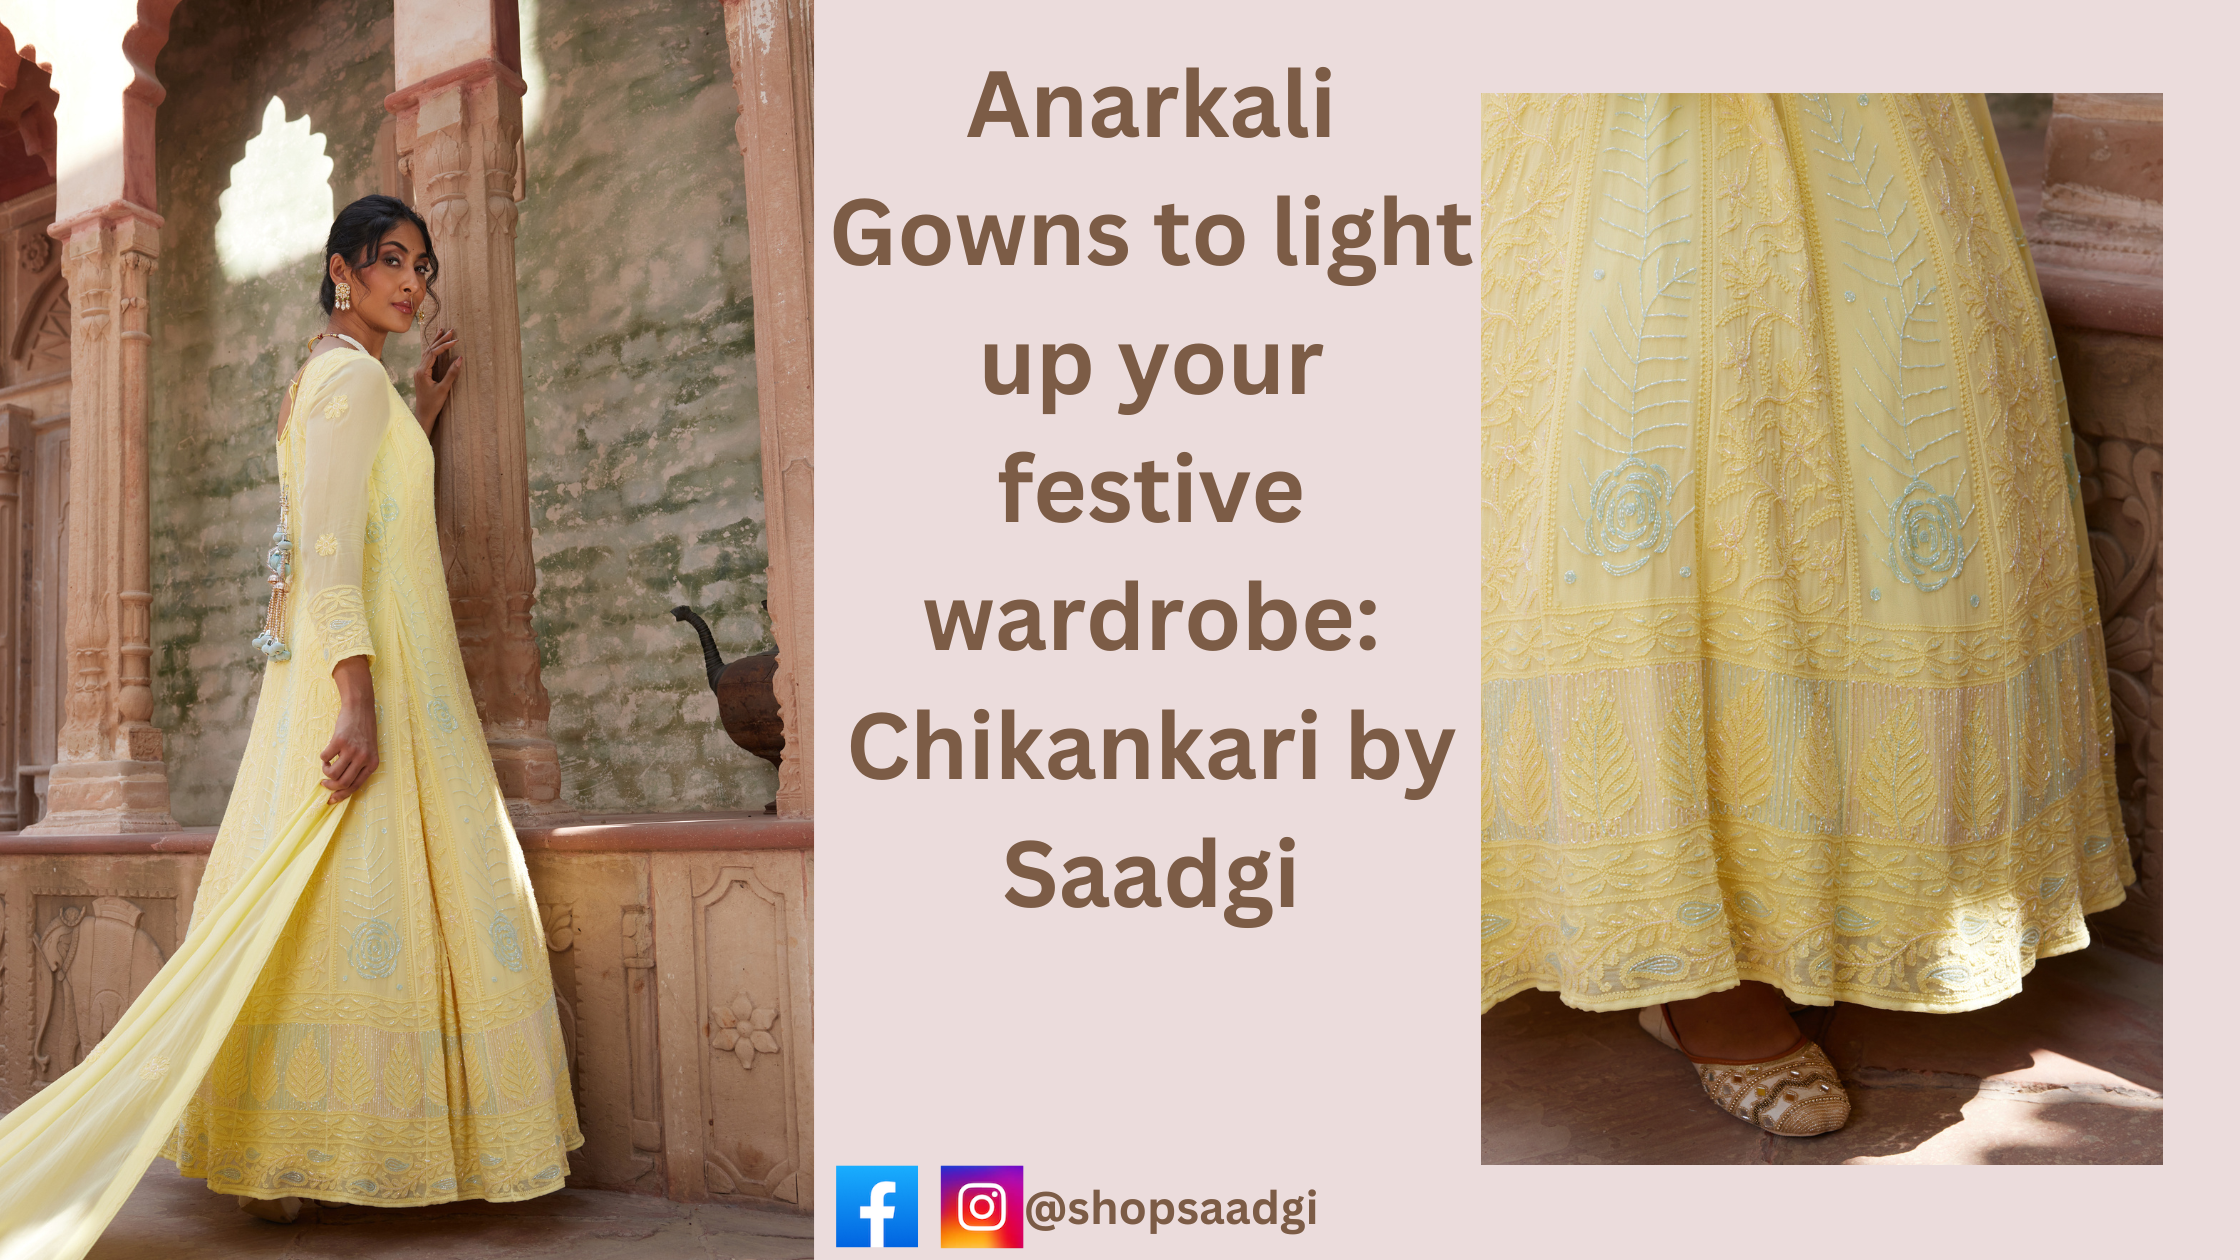 Anarkali Gowns to light up your festive wardrobe: Chikankari by Saadgi